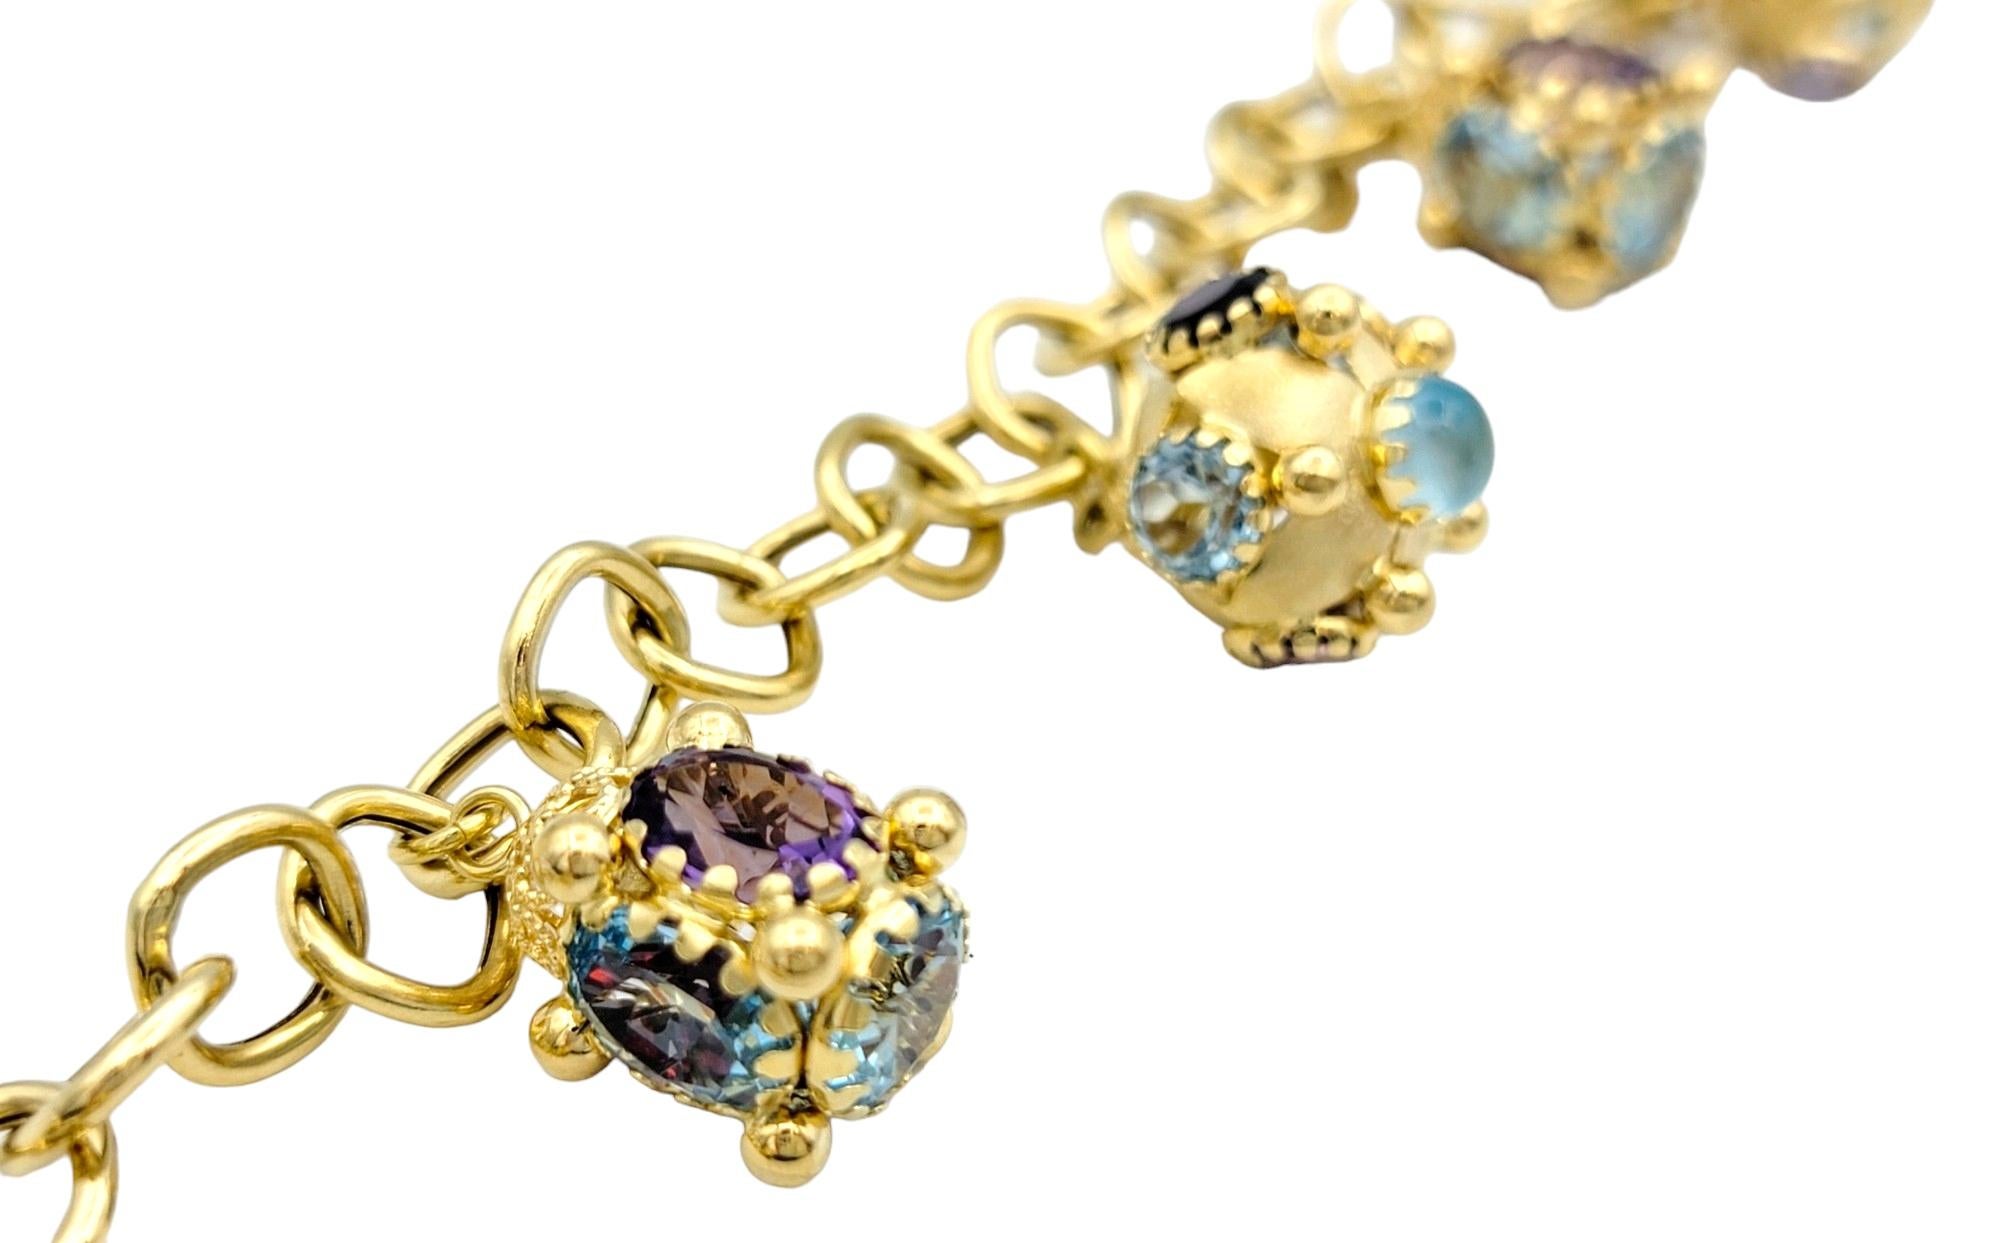 Oval Cut Multi-Colored Gemstone Dangle Charm Bracelet Set in 18 Karat Yellow Gold